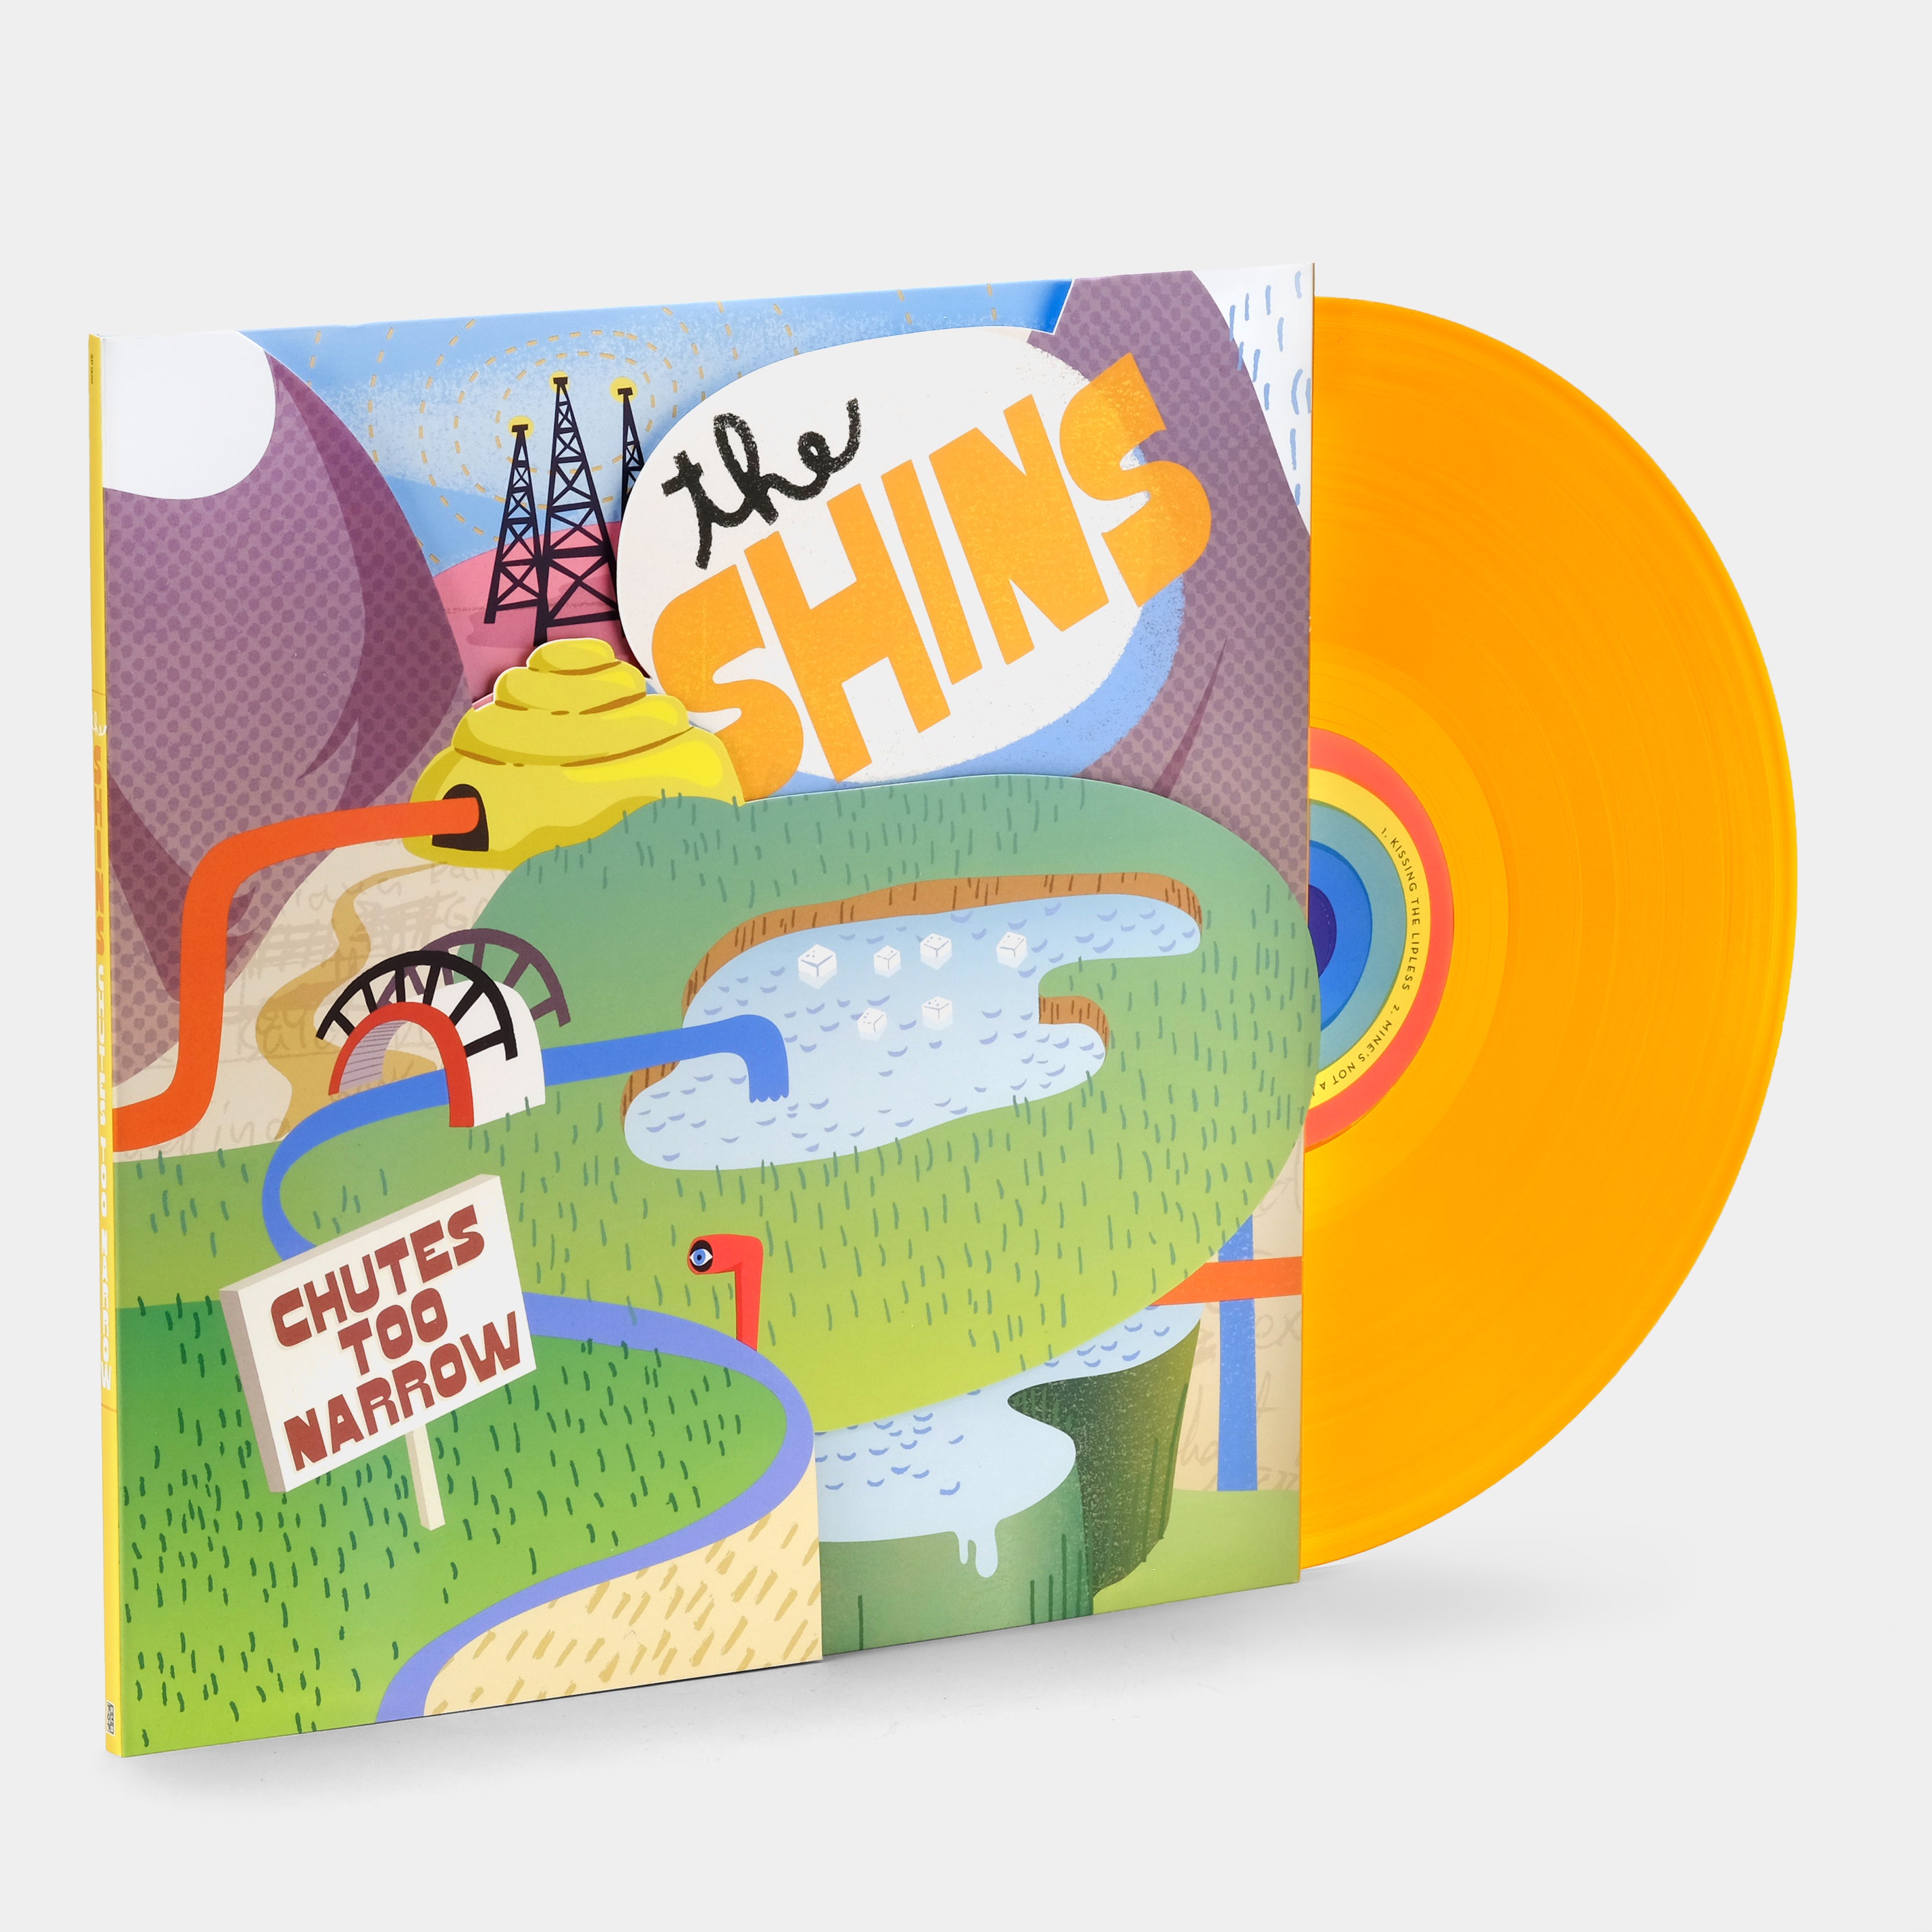 The Shins - Chutes Too Narrow (20th Anniversary Remaster) Transparent Orange LP Vinyl Record